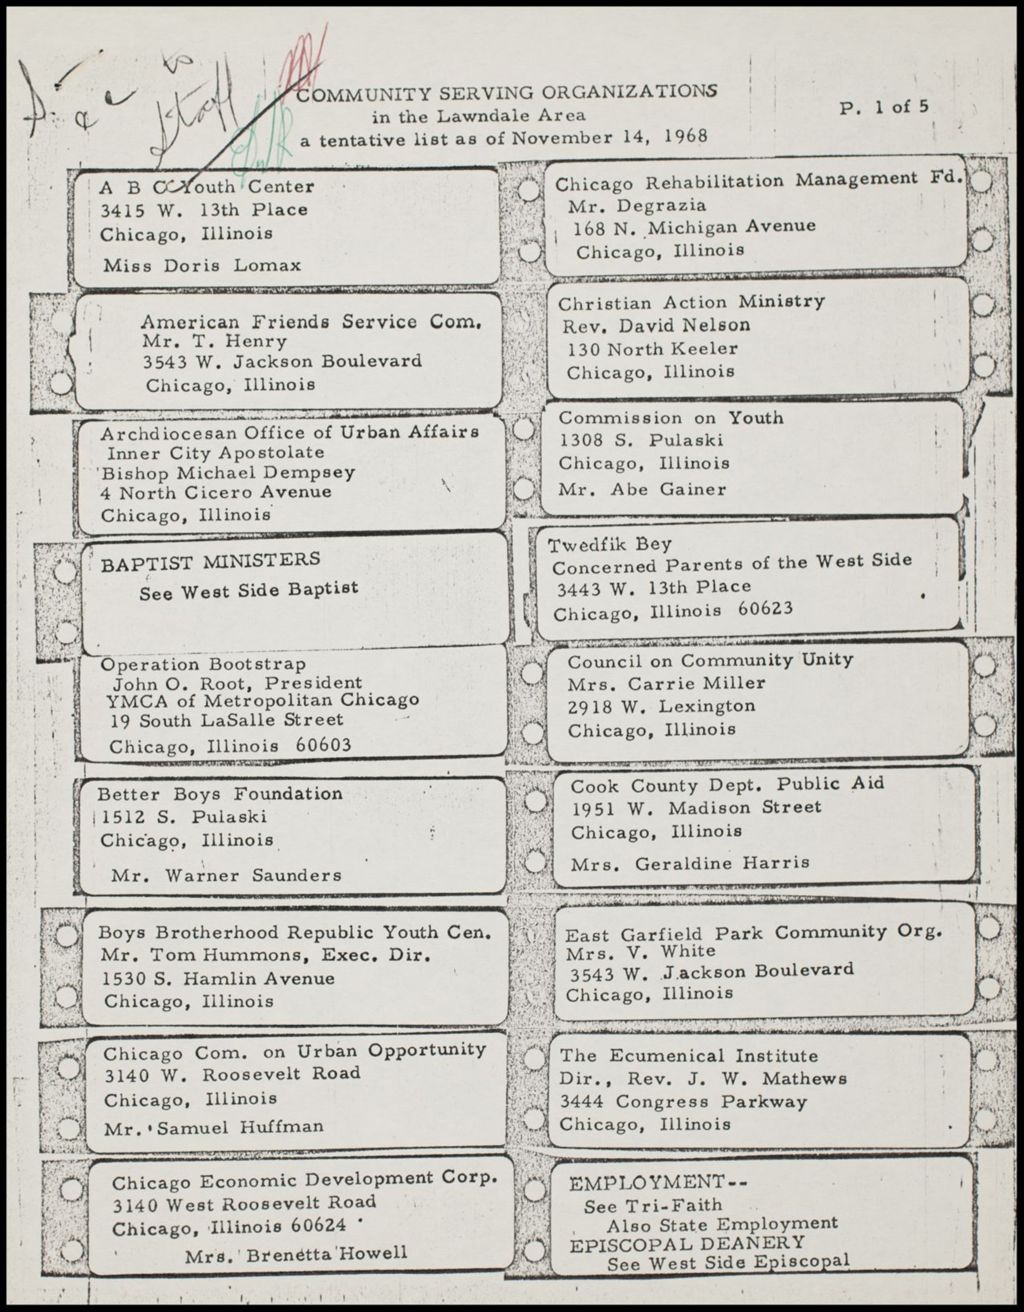 Miniature of List of Lawndale Community Organizations, 1968 (Folder I-2969)